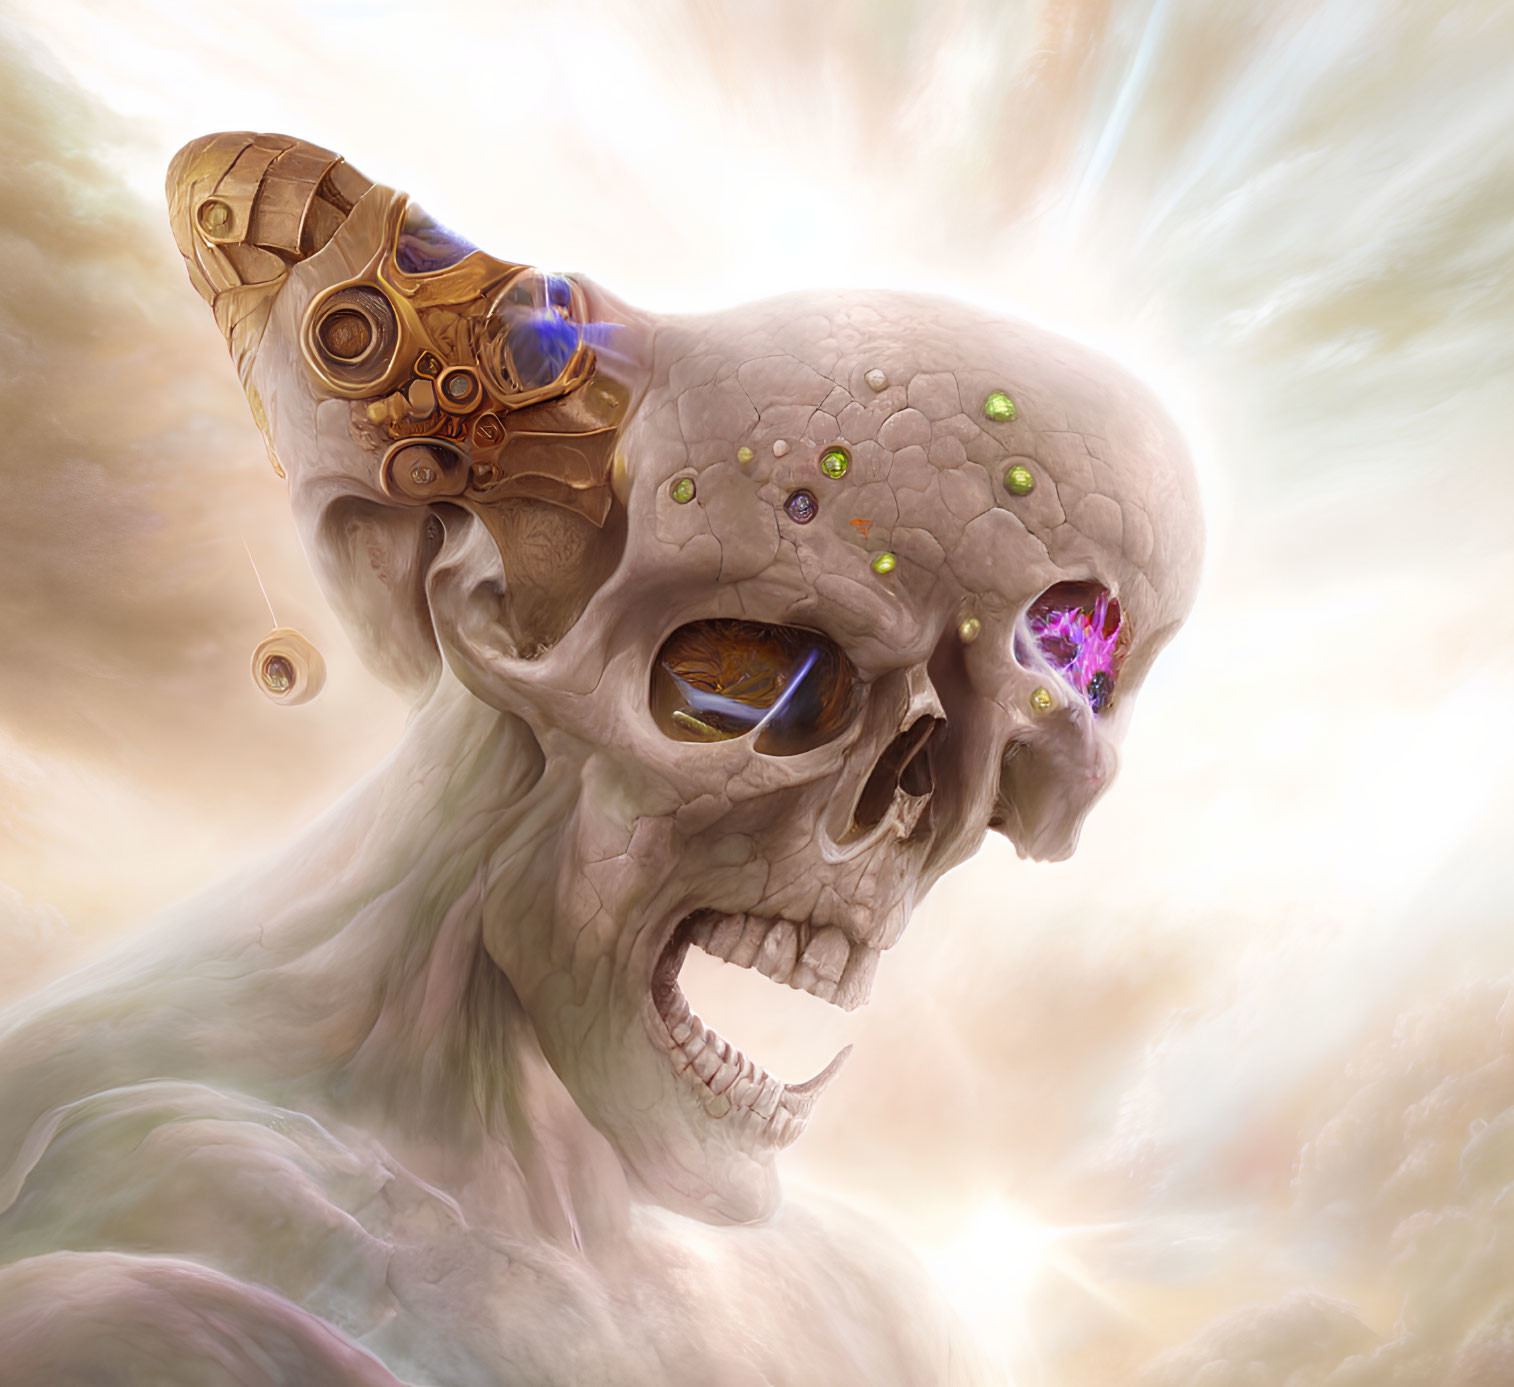 Detailed Digital Artwork: Alien Skull with Mechanical Enhancements and Glowing Gems on Luminous Cloud